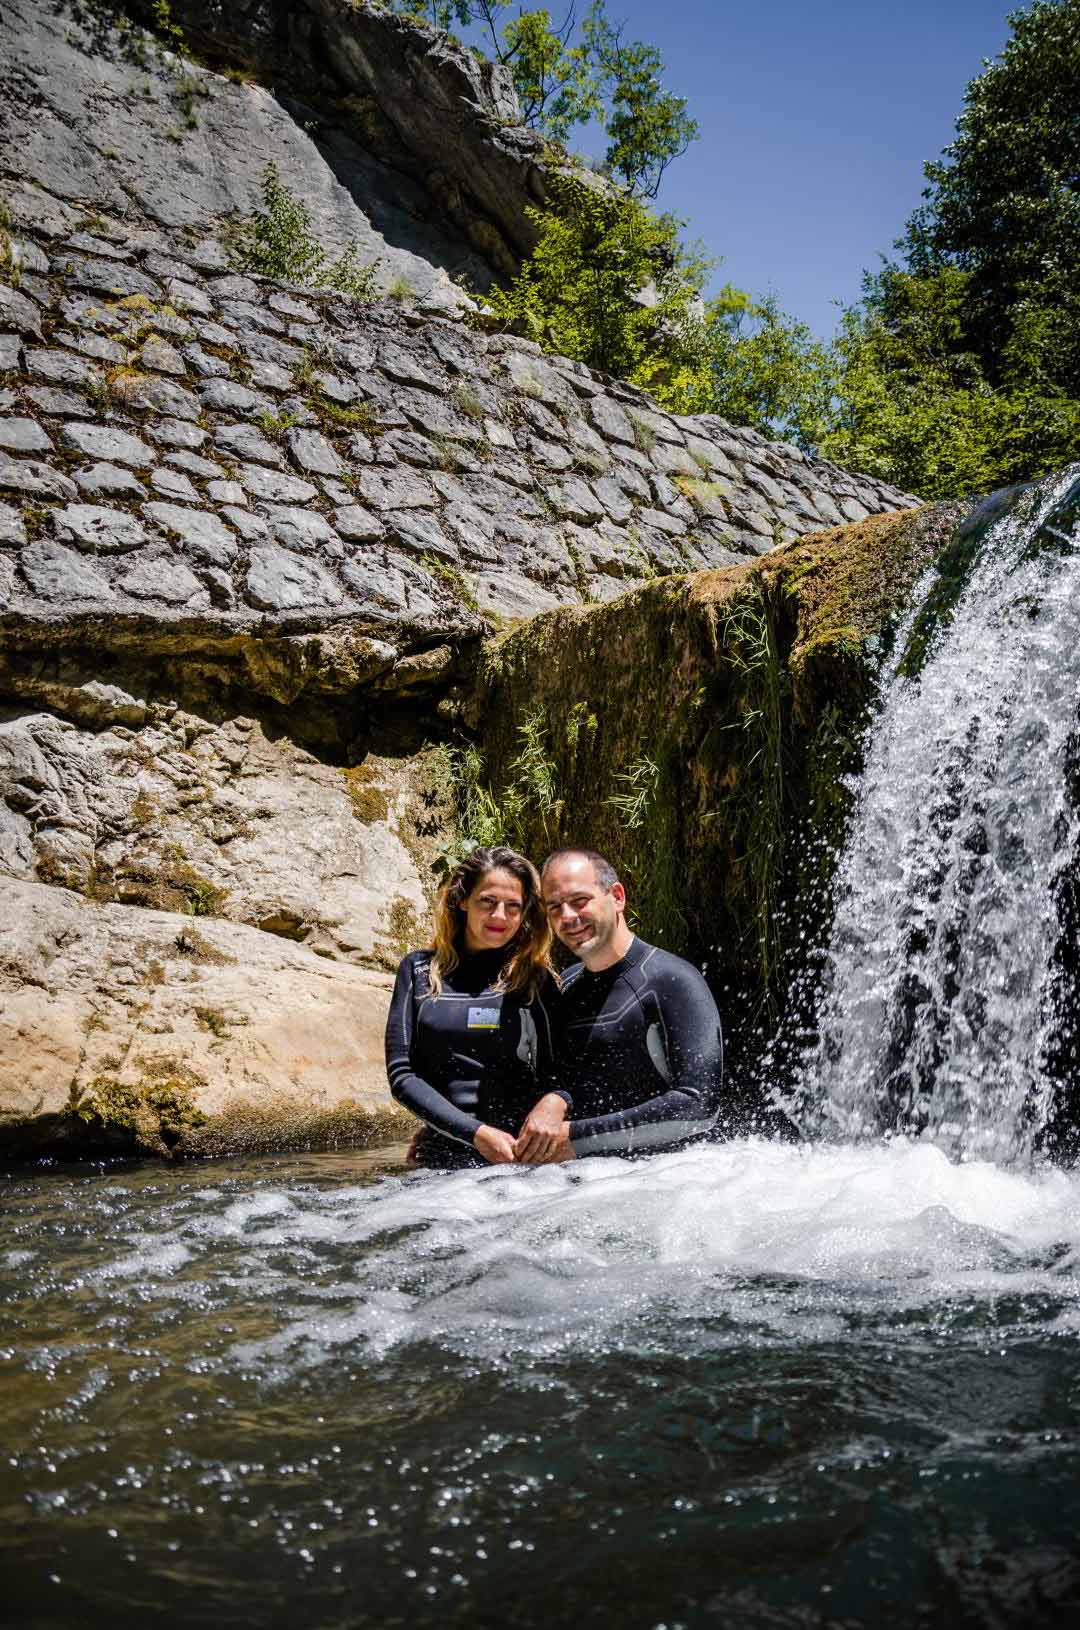 Muž i žena u kanjonu Kratovske reke pored vodopada